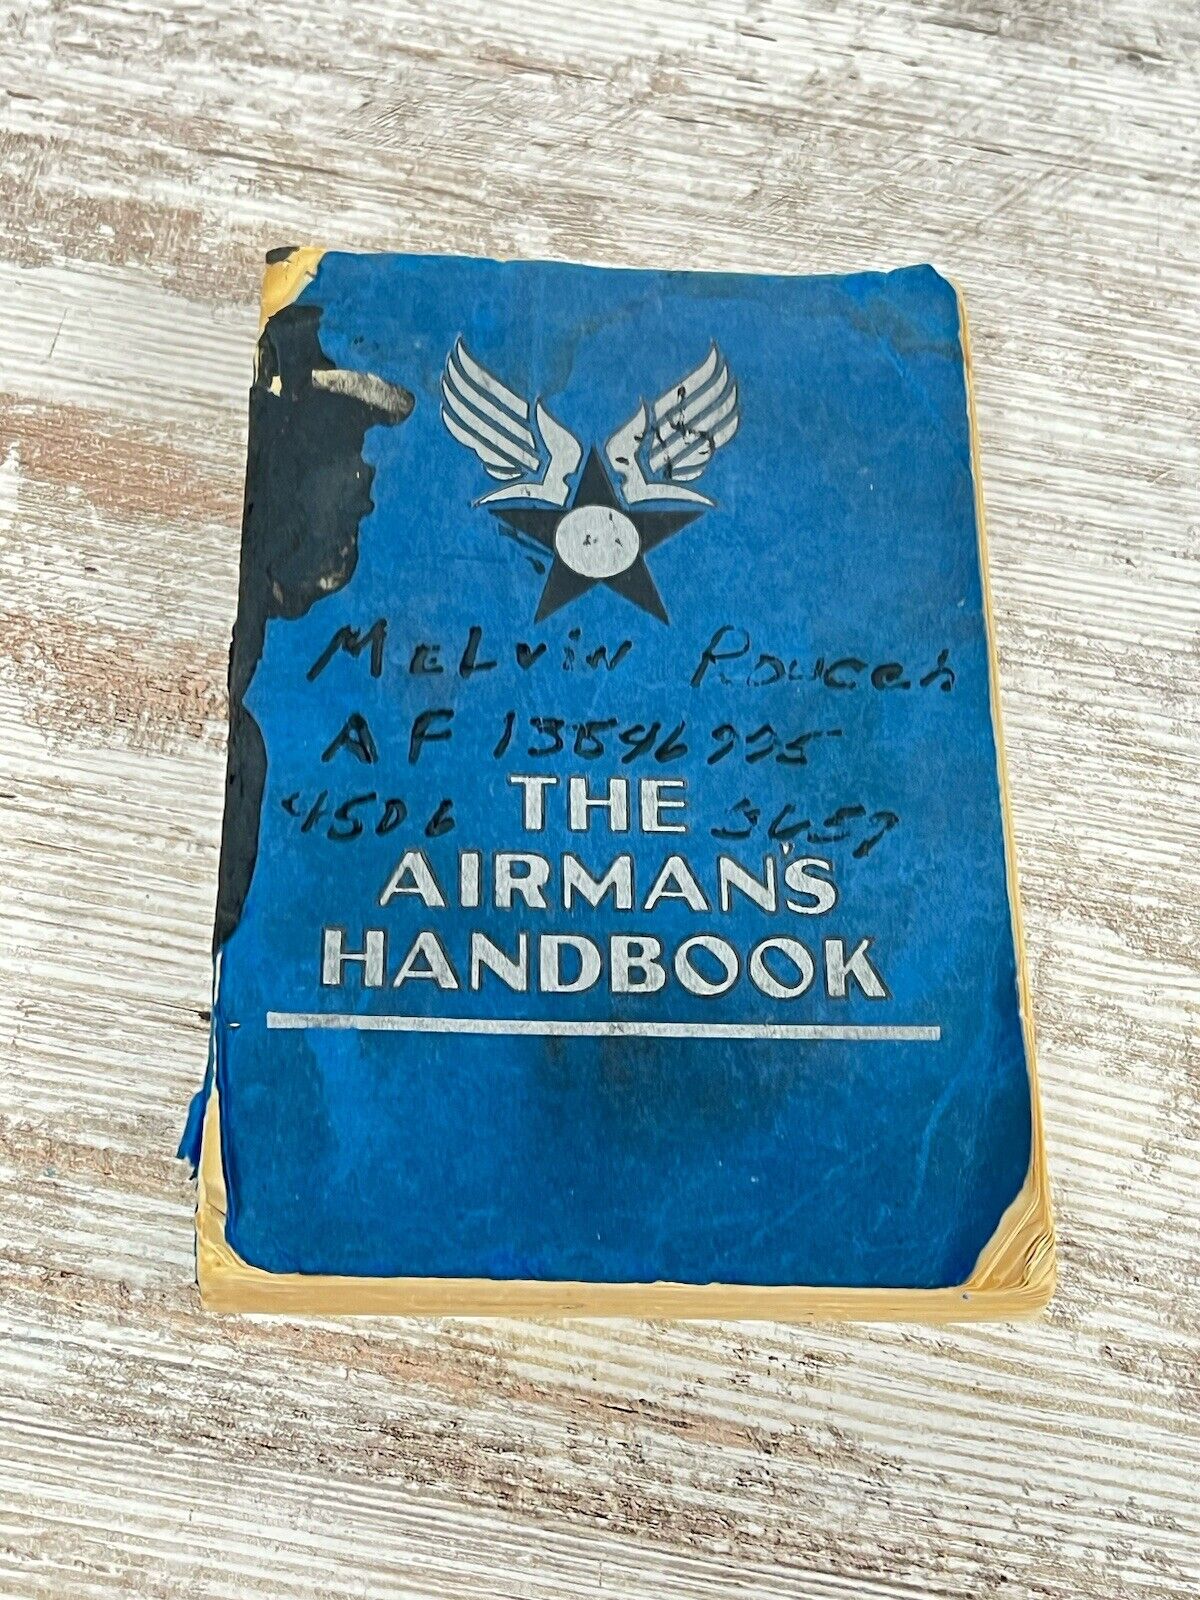 1951, The Airman's Handbook, U.S. Air Force, U.S. Military, Second Edition